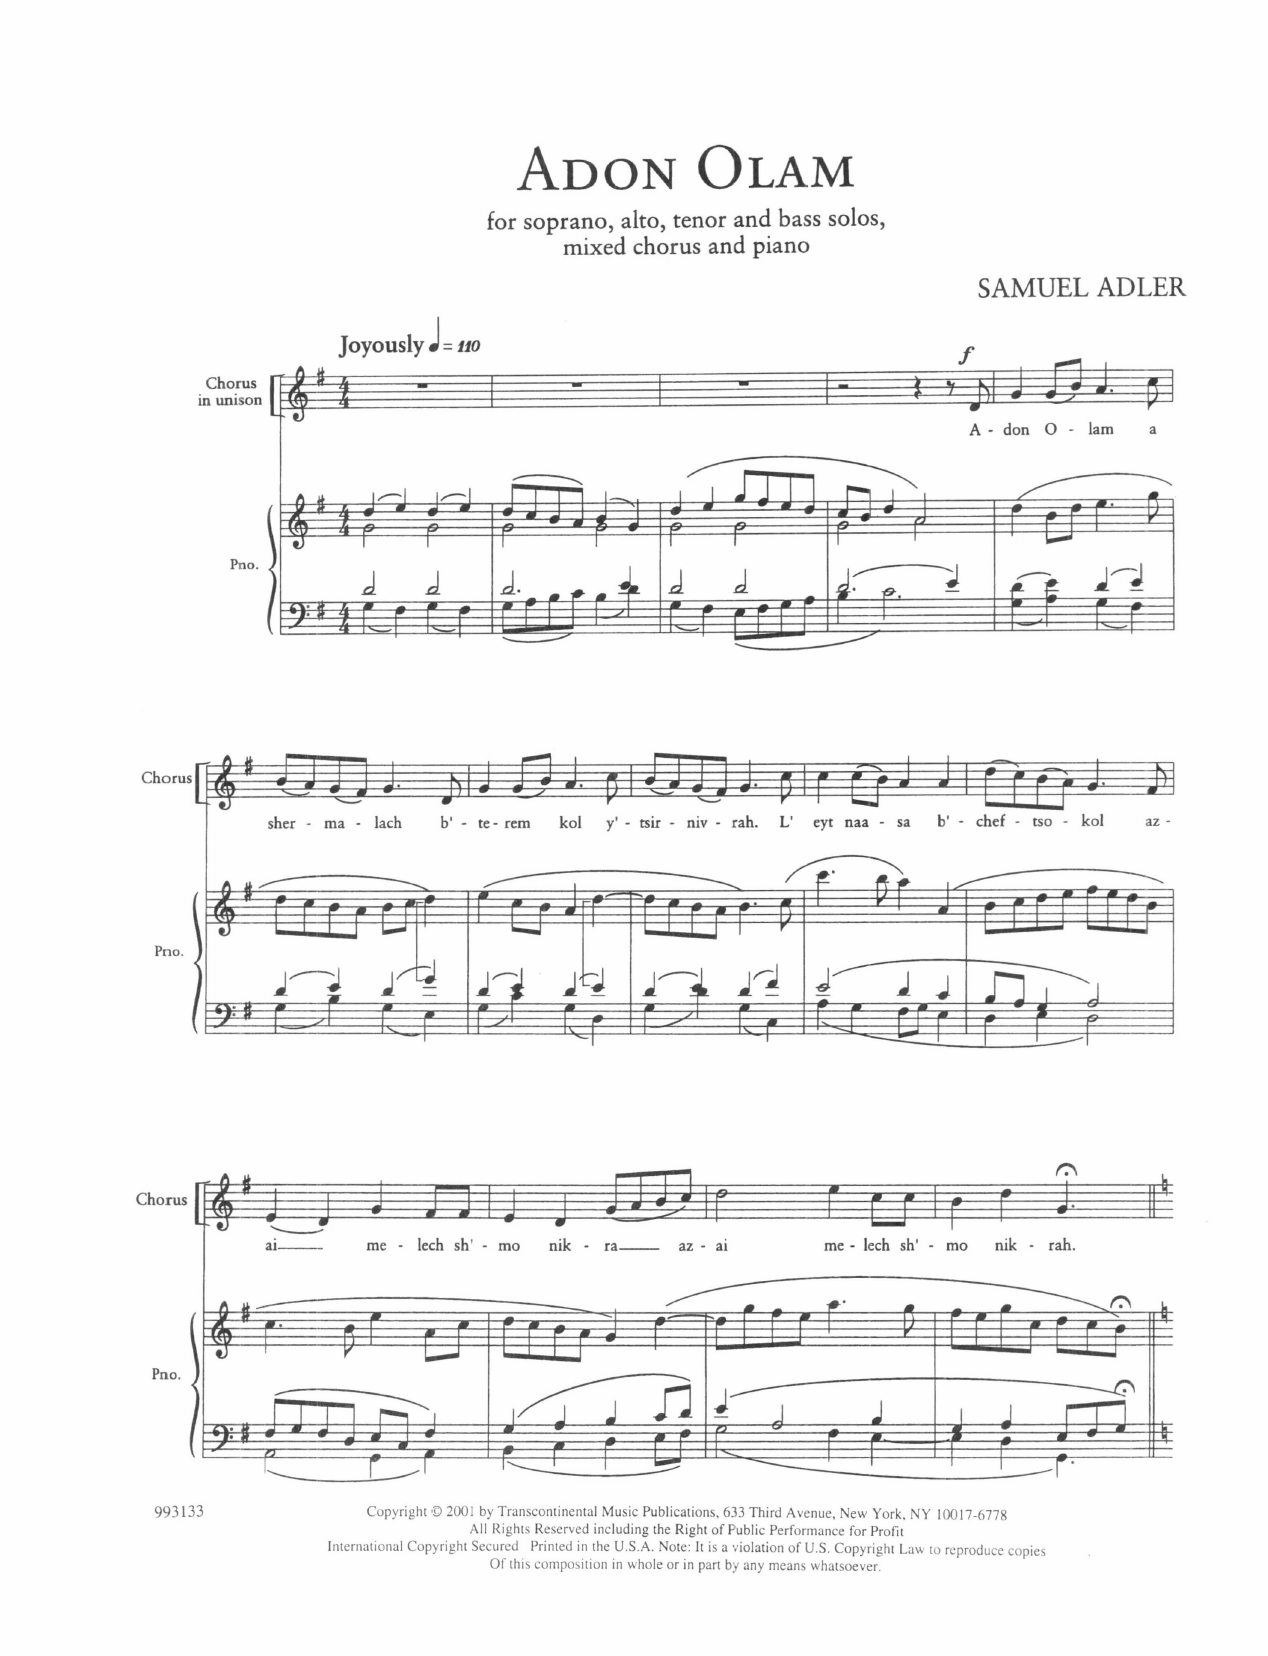 Download Samuel Adler Five Sephardic Choruses: Adon Olam Sheet Music and learn how to play SATB Choir PDF digital score in minutes